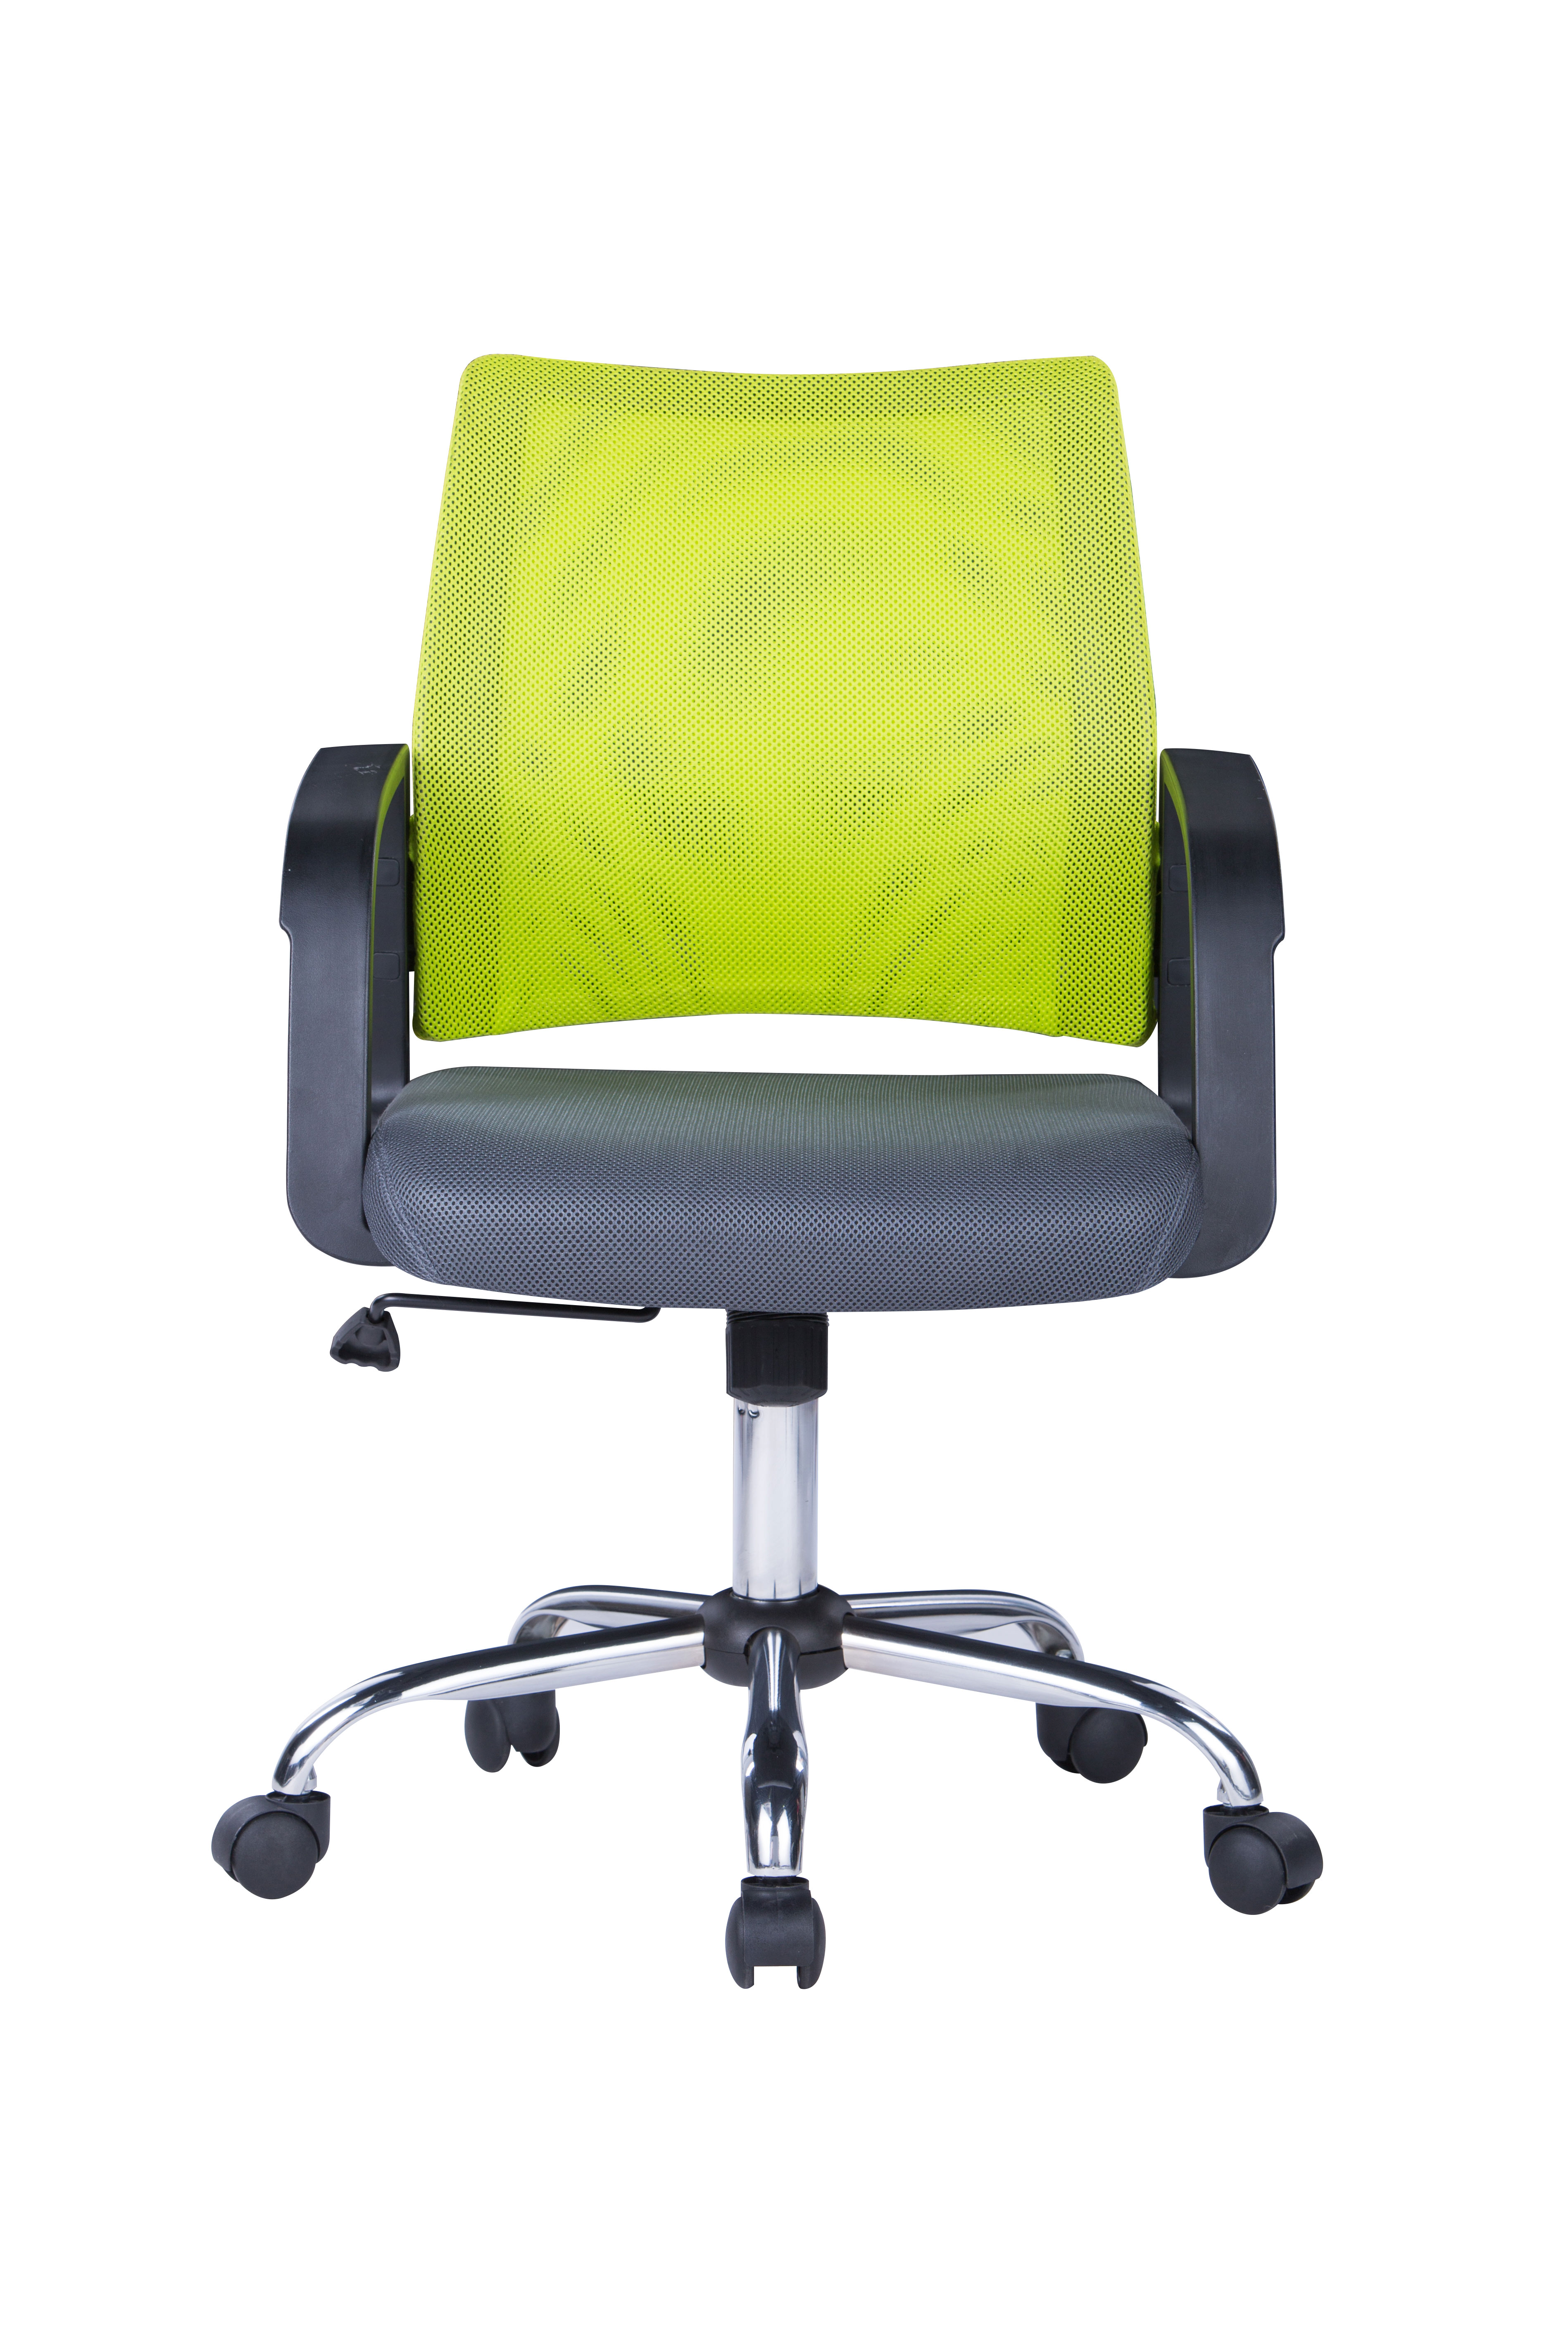 W-127 Modern Office Rotating Chair